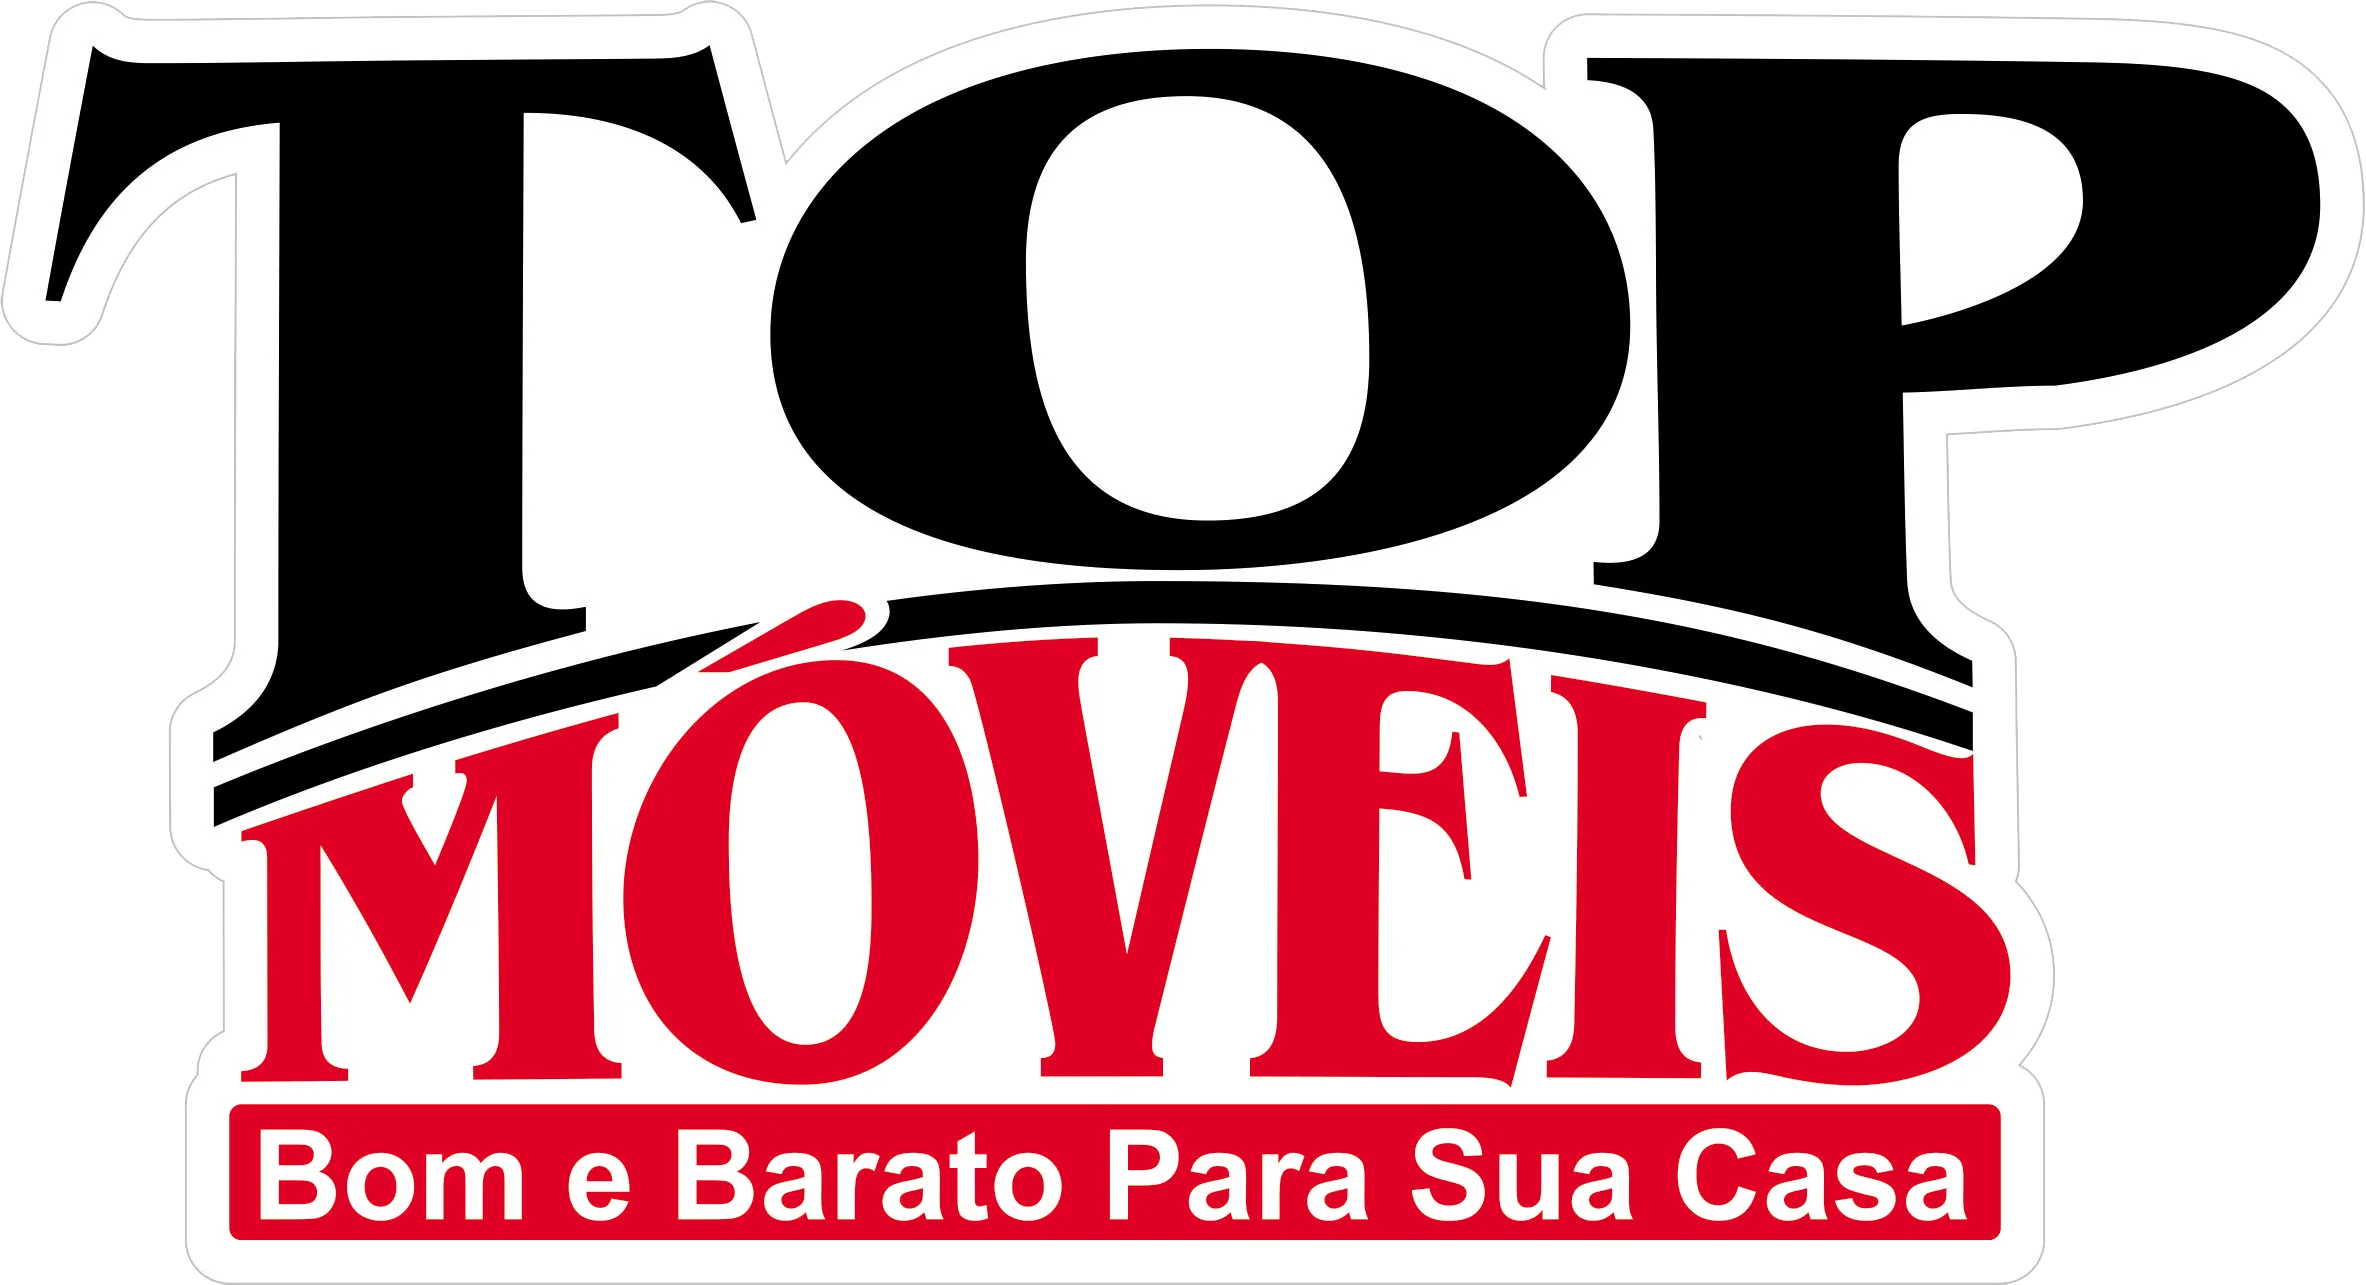 lojastopmoveis.com.br